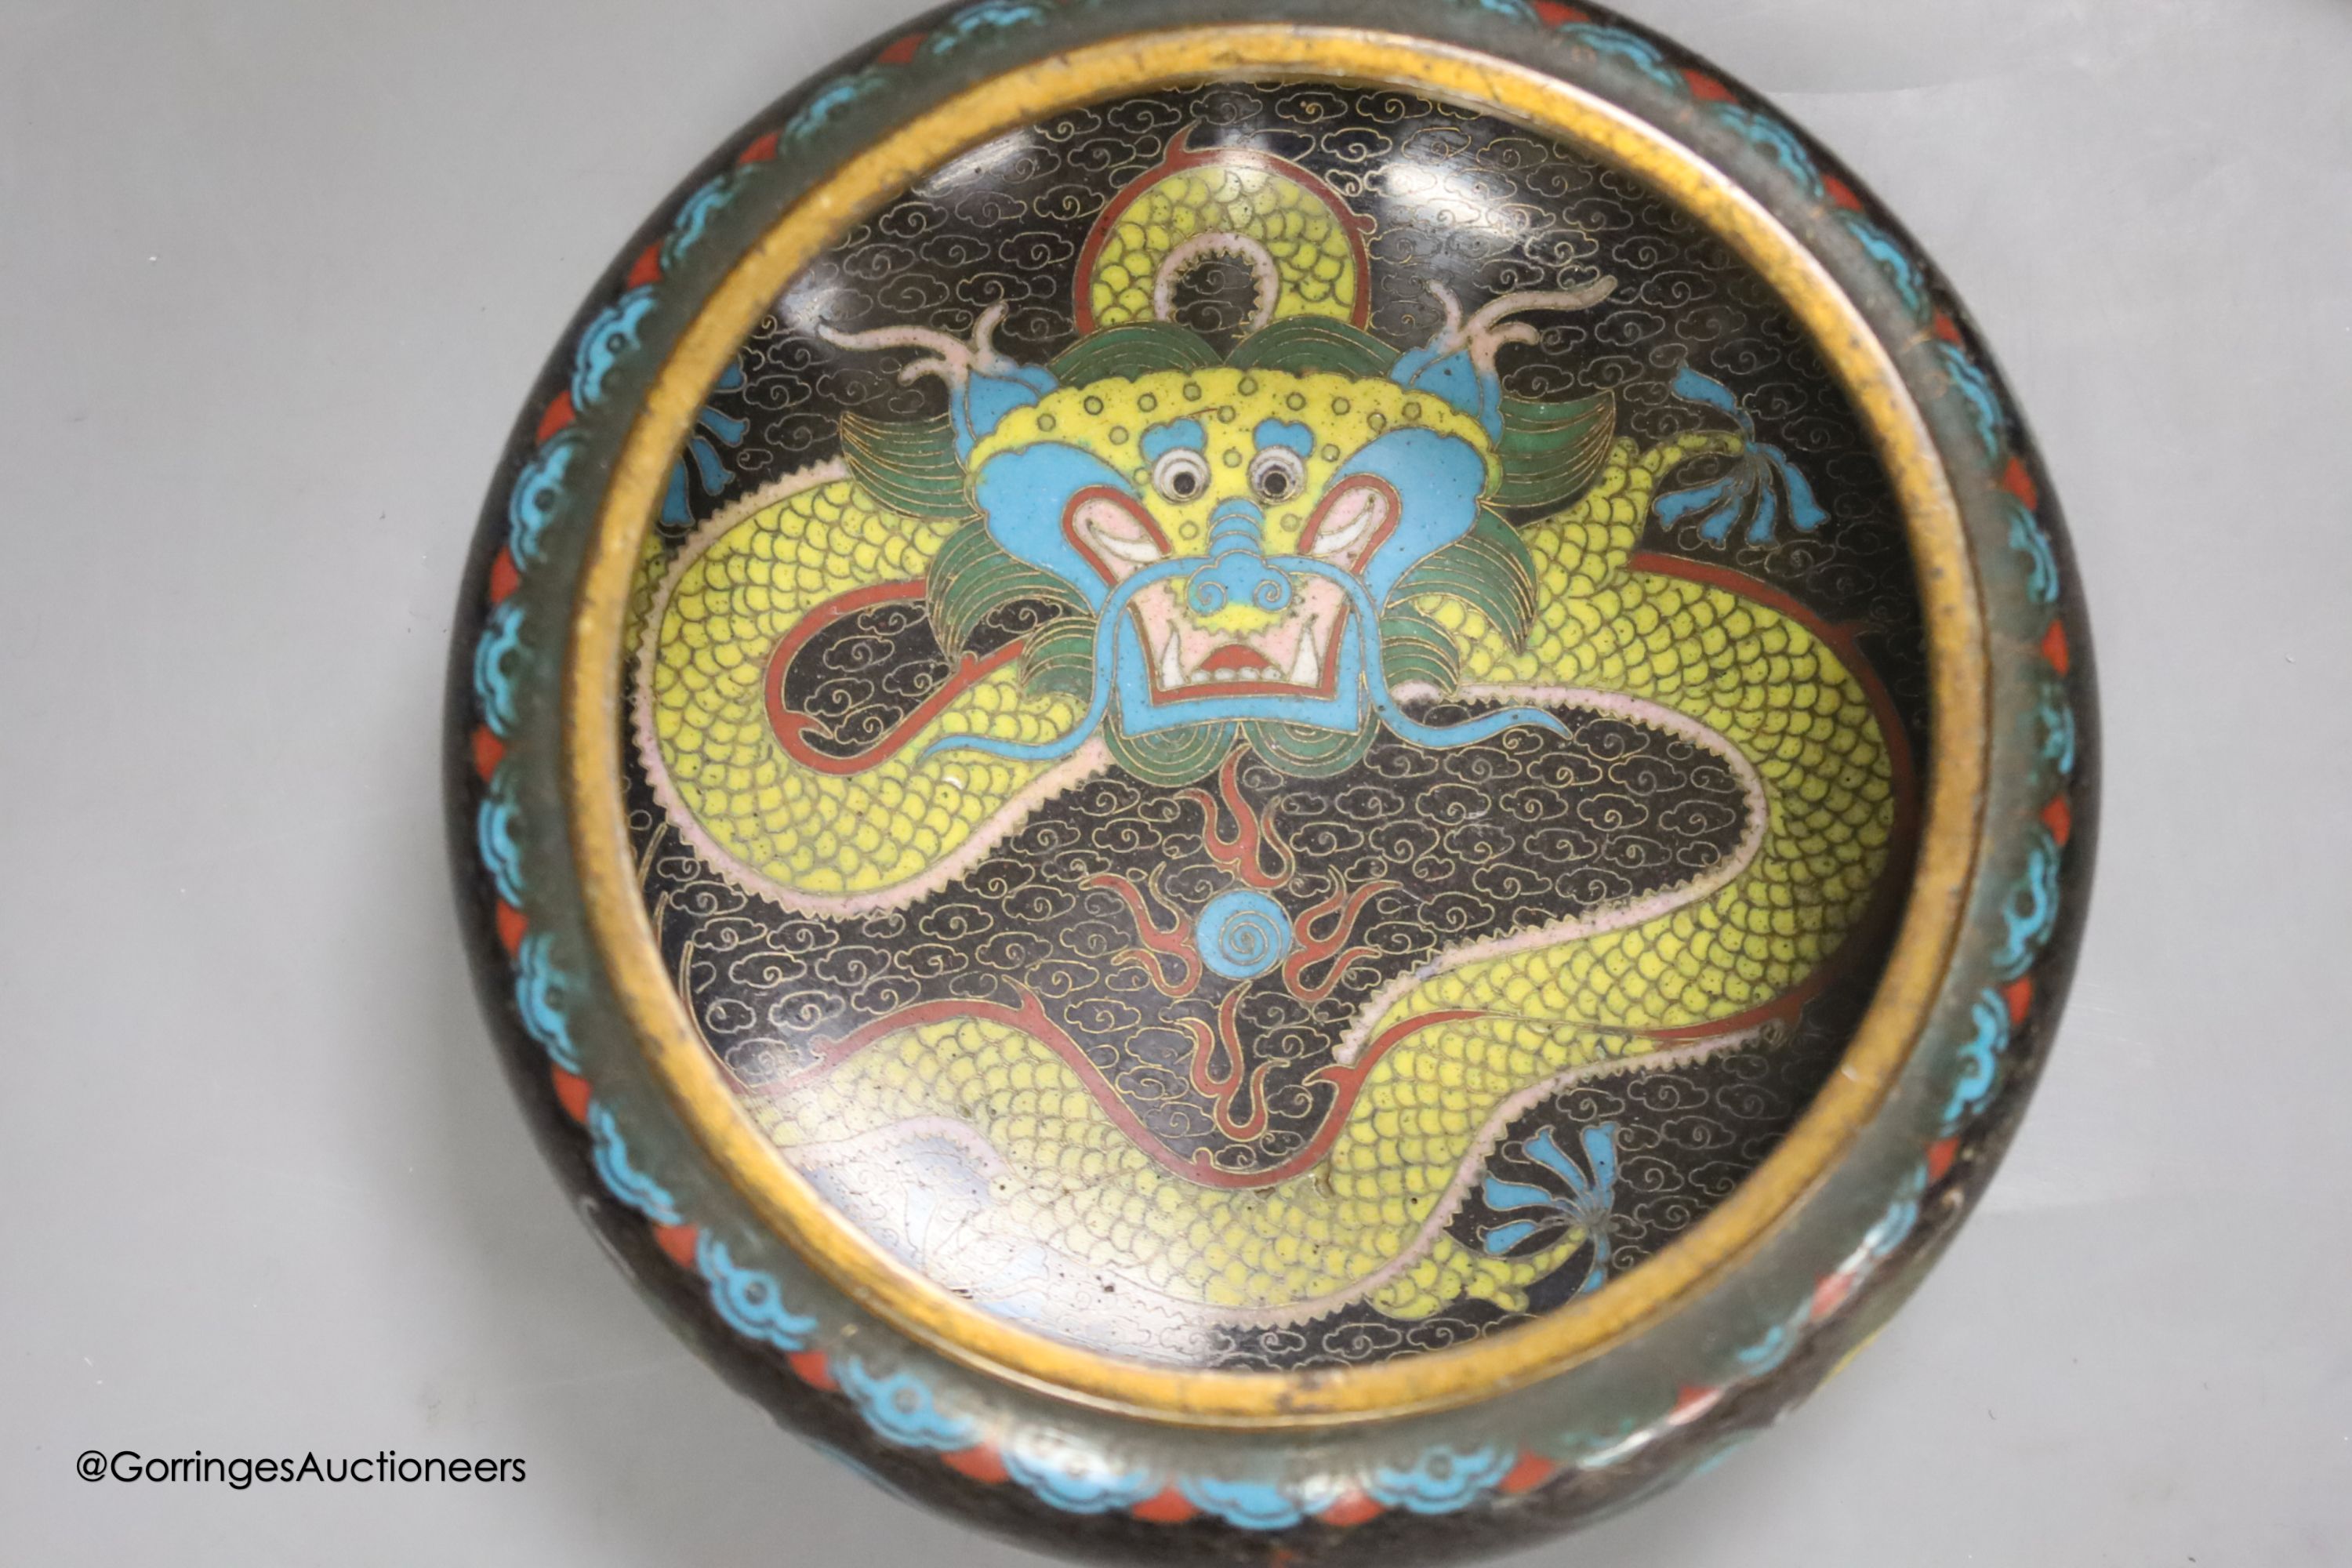 A 1920's Chinese cloisonne enamel 'dragon' bowl and a cinnabar lacquer box, 15 x 11 x 5cm